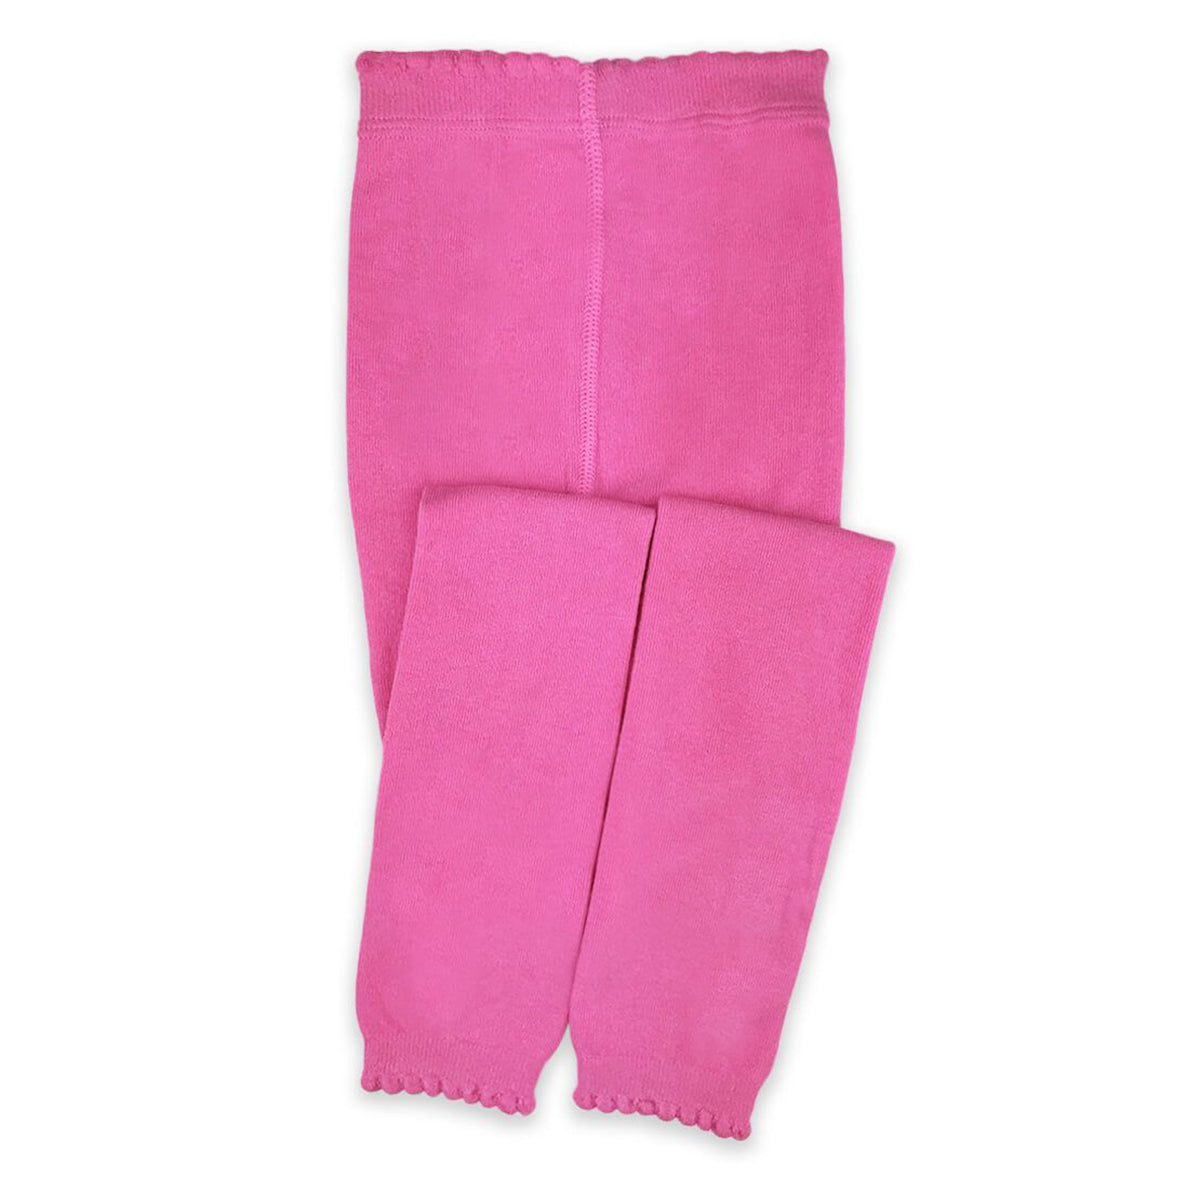 Jefferies Socks Scalloped Footless Tights Bubblegum Pink Leggings